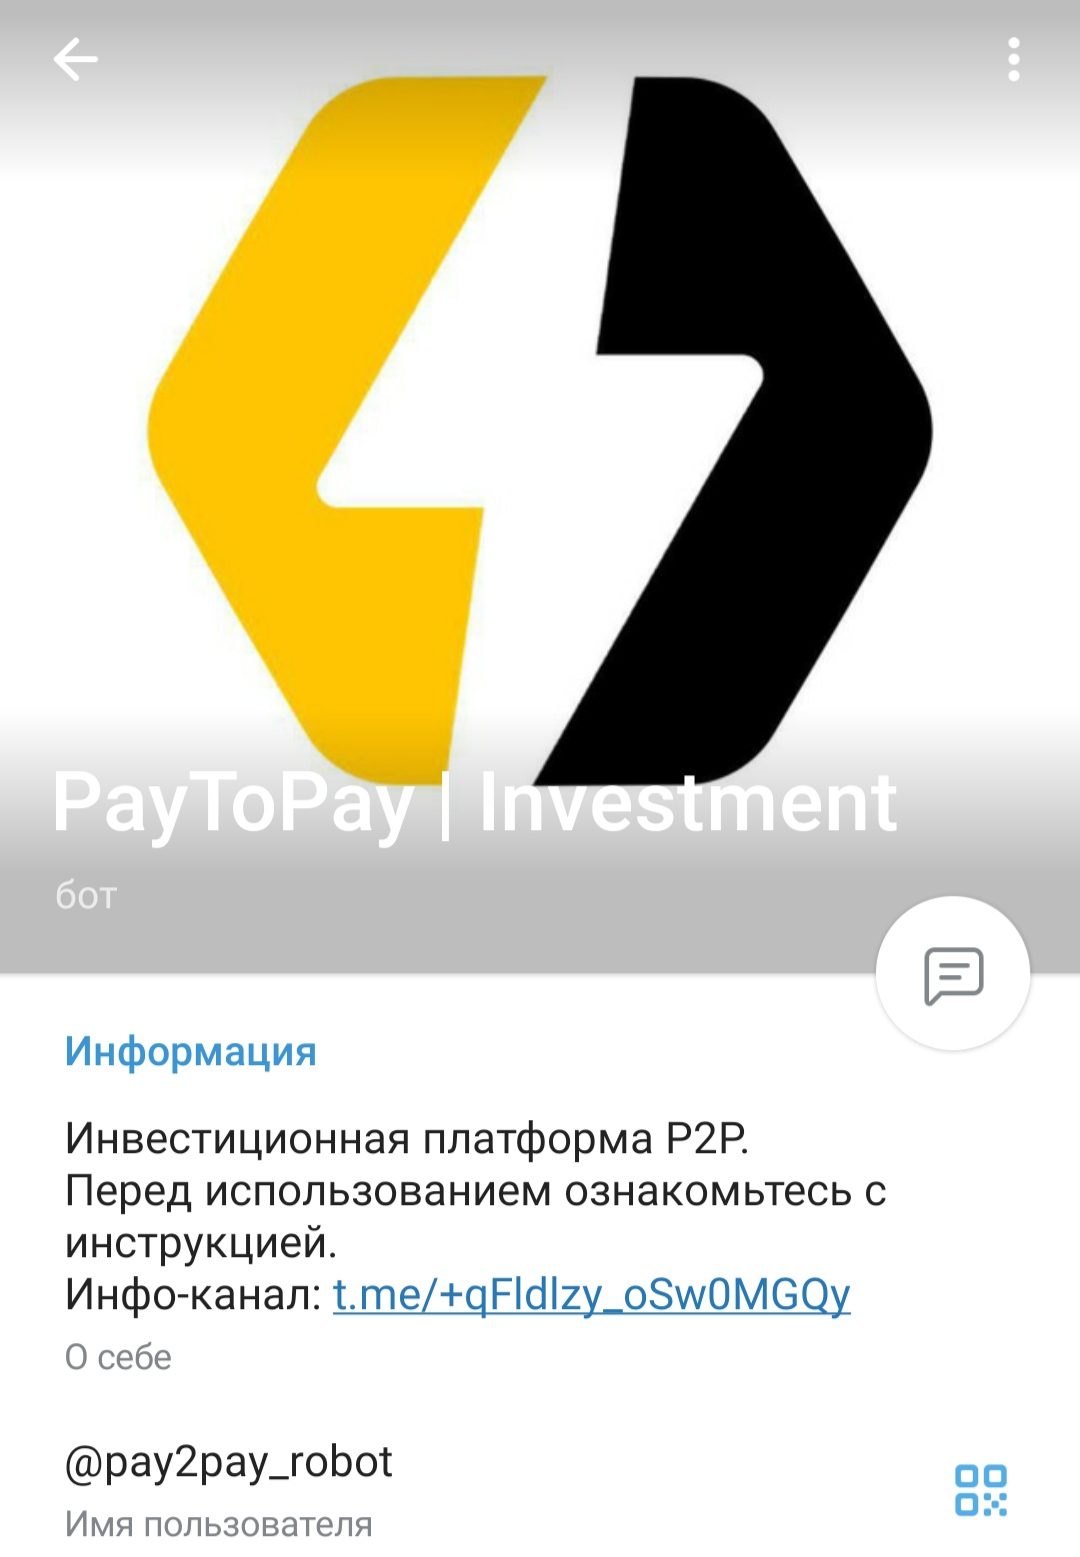 Pay2pay бот Телеграмм